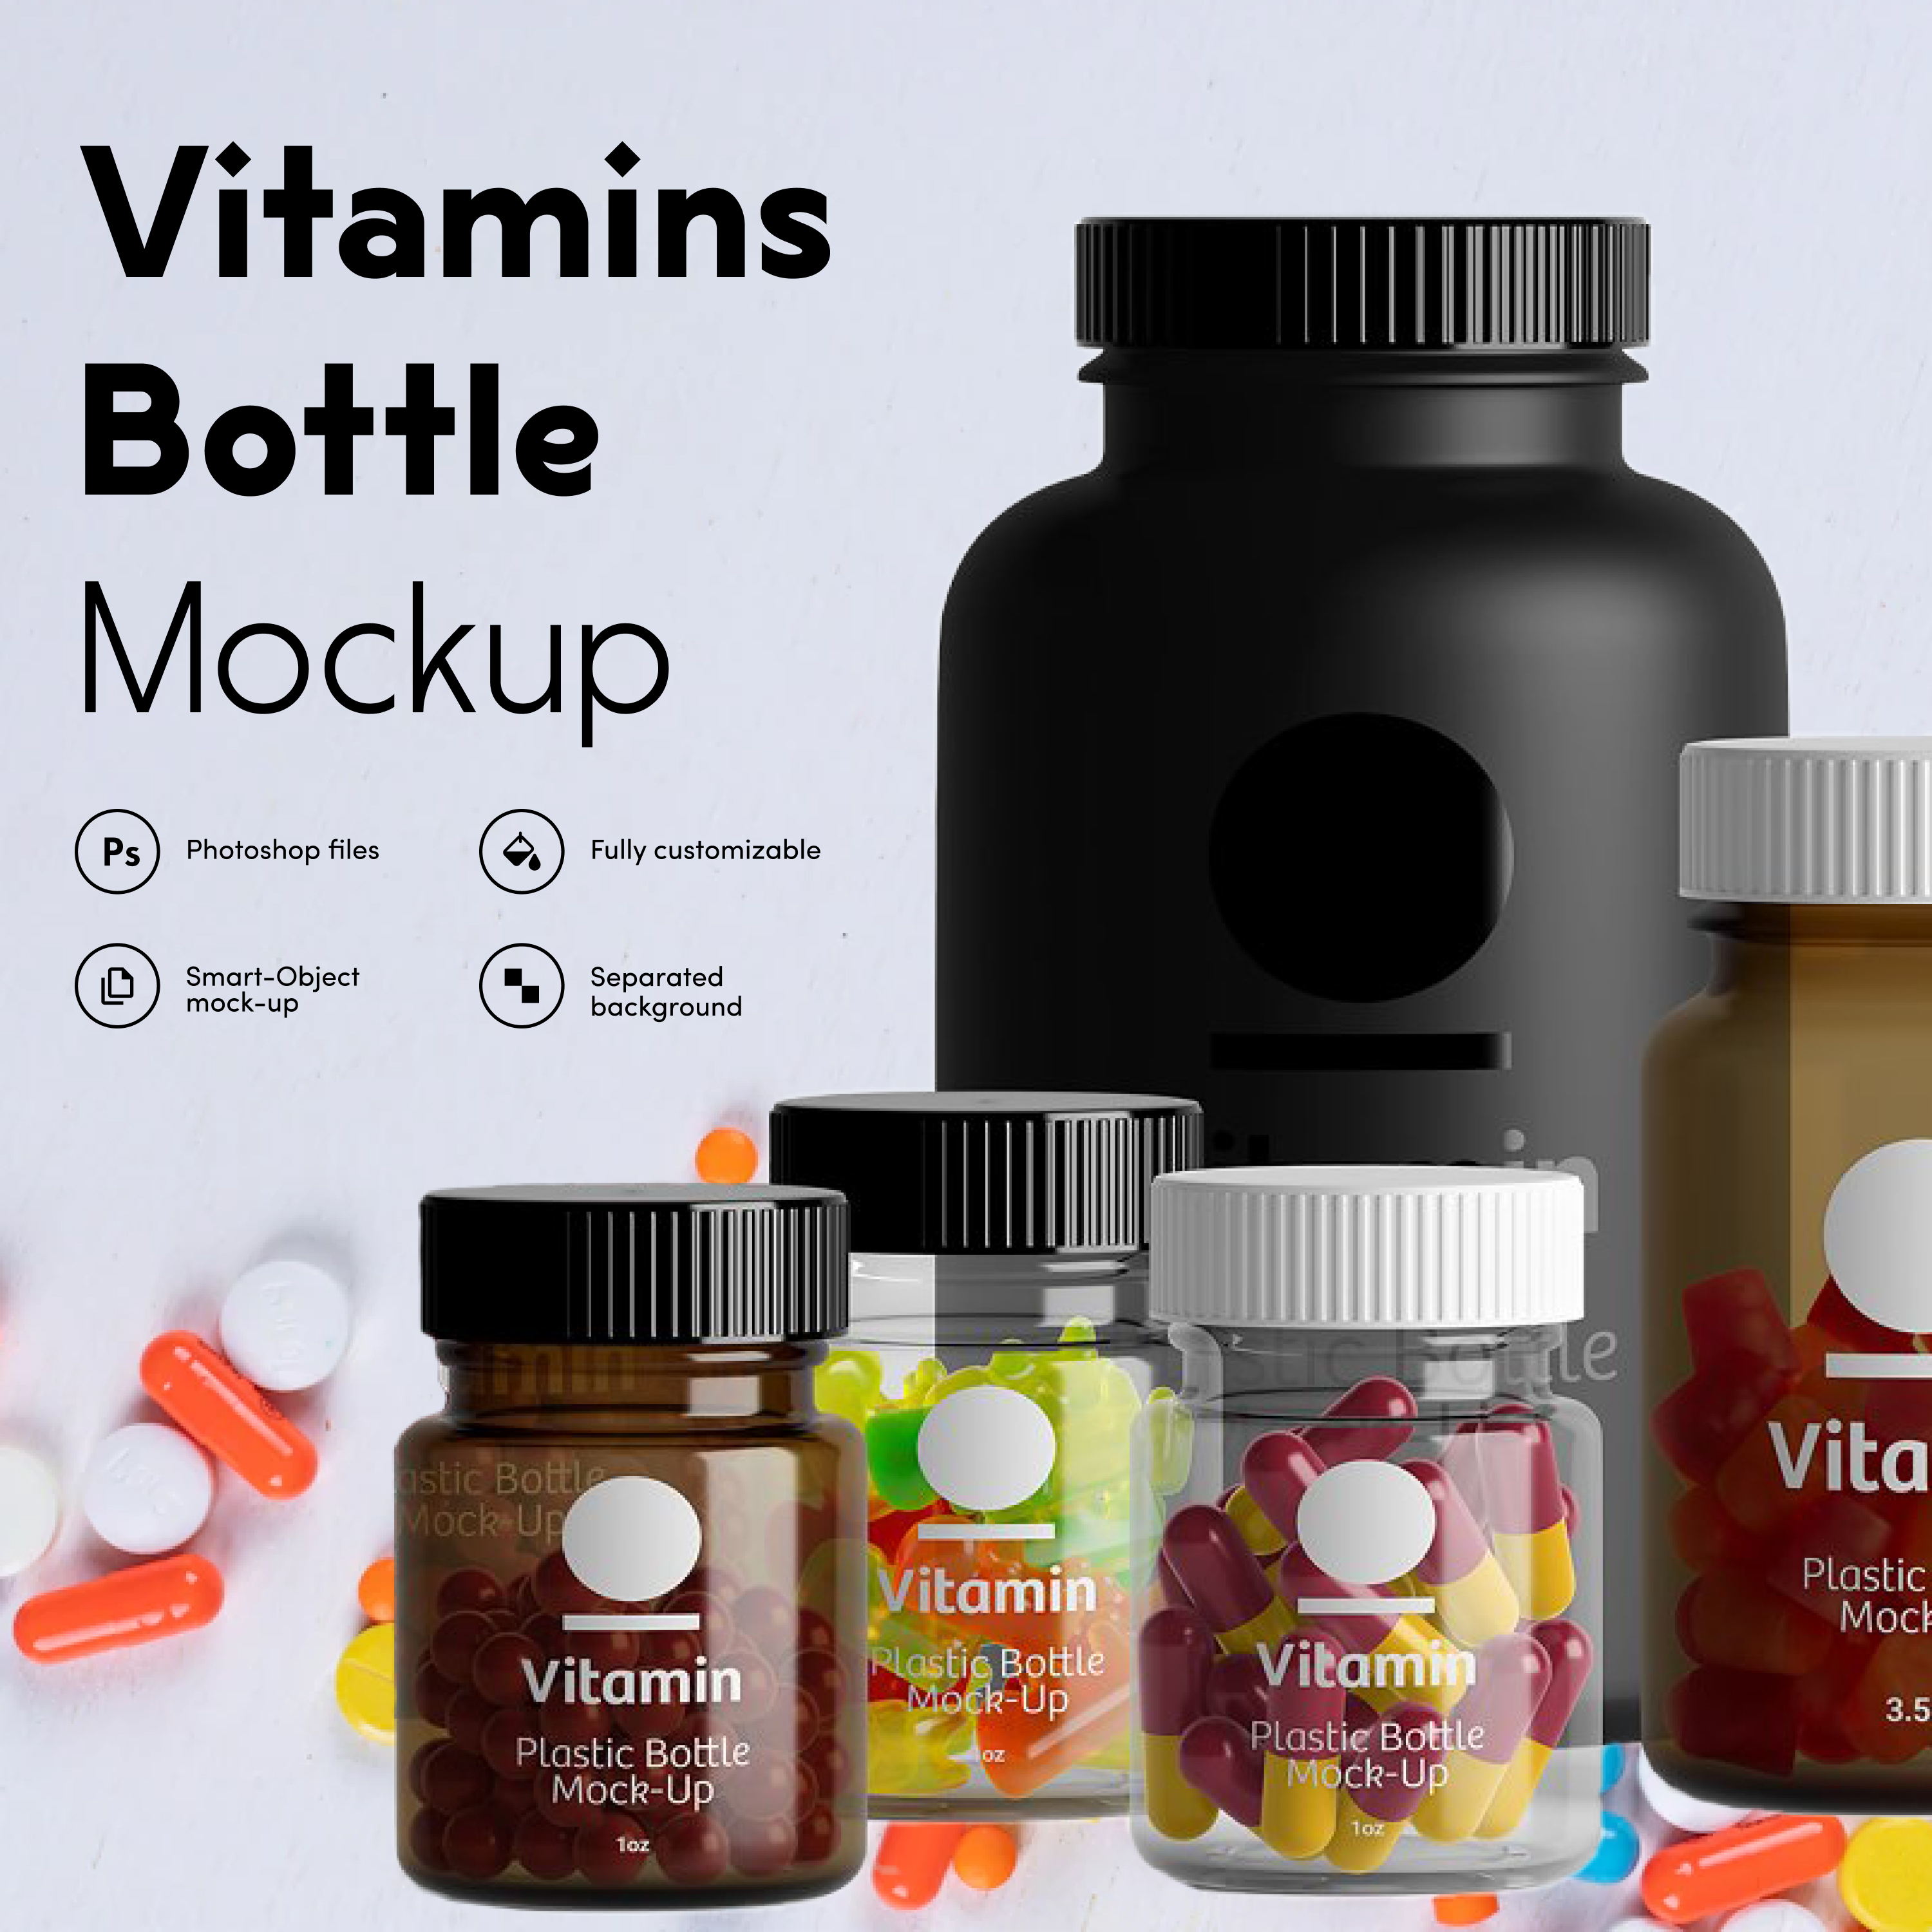 Vitamins bottle mockup preview.